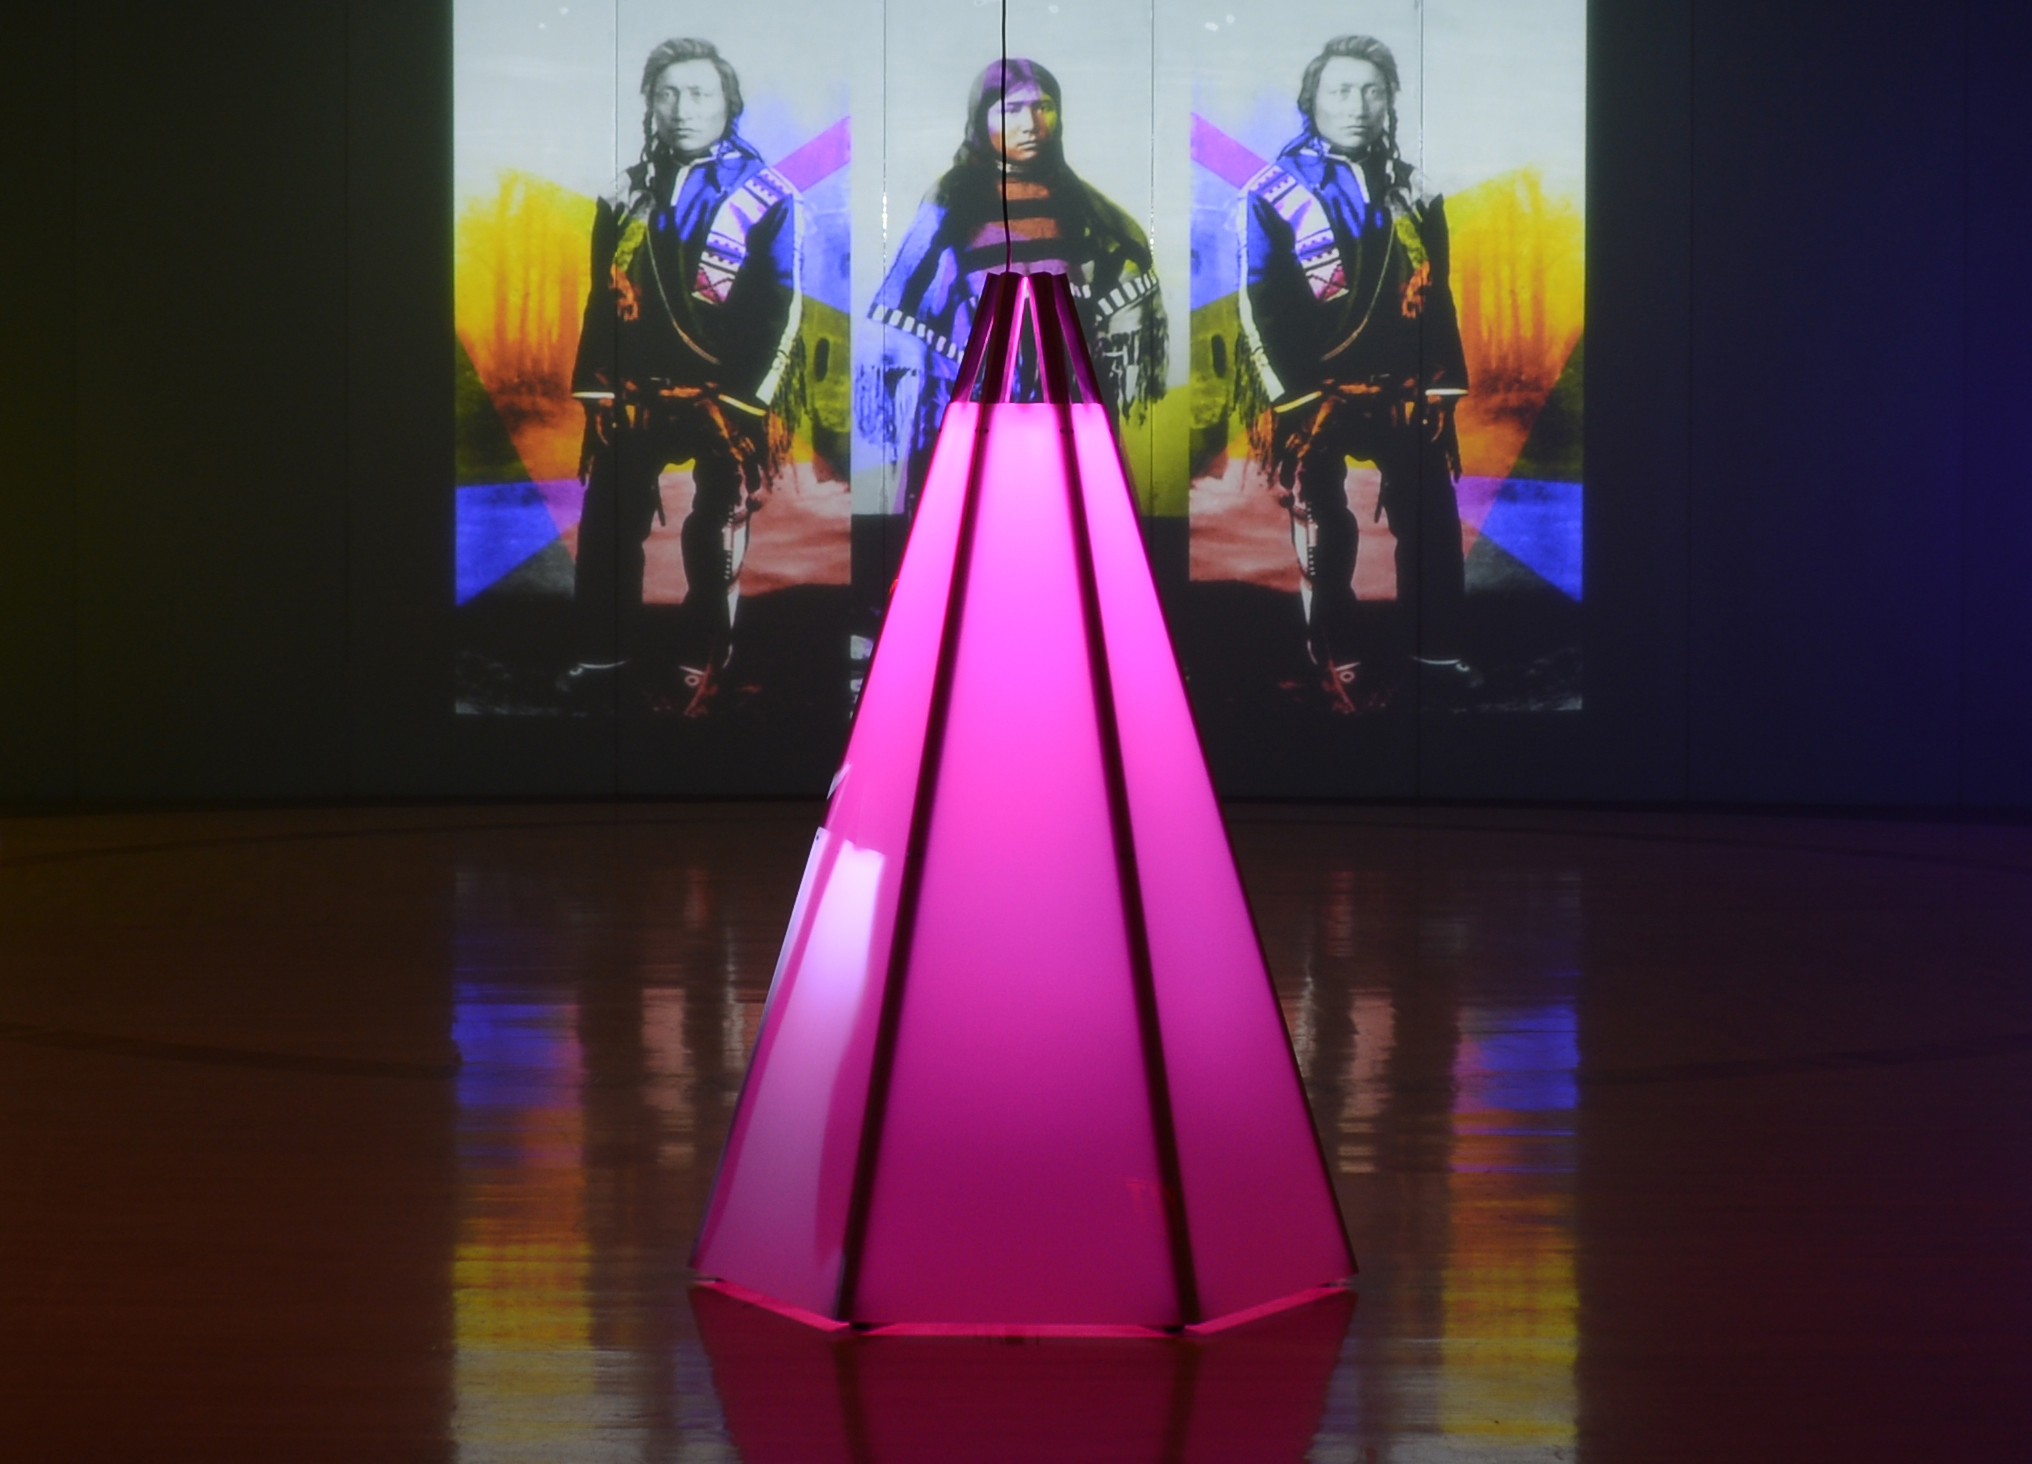 Art installation showing pink neon tipi